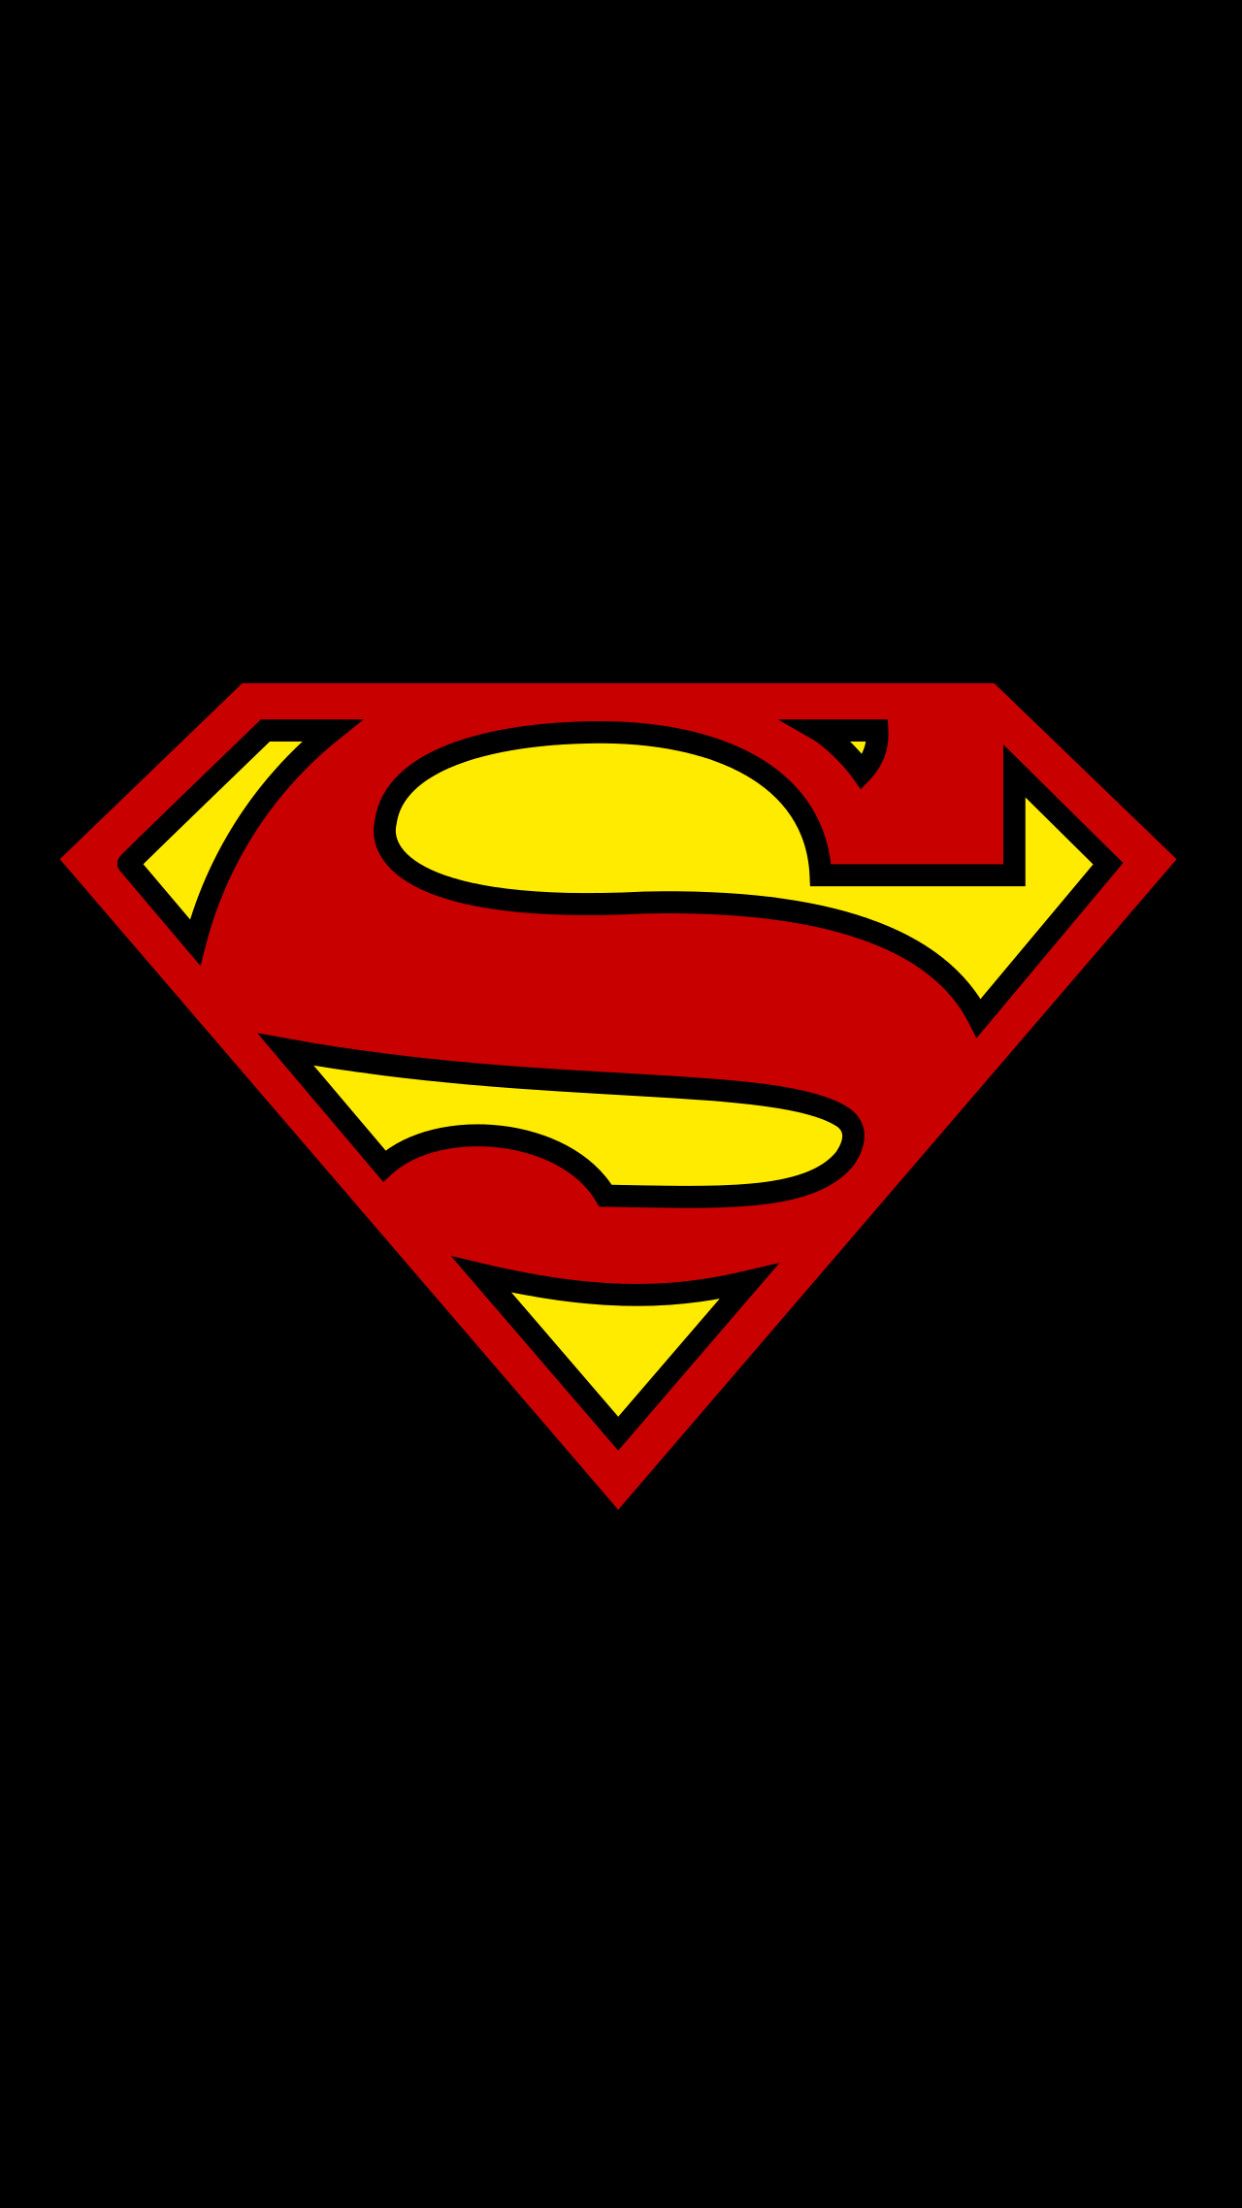 Superman Logo iPhone Wallpaper Free Superman Logo iPhone Background